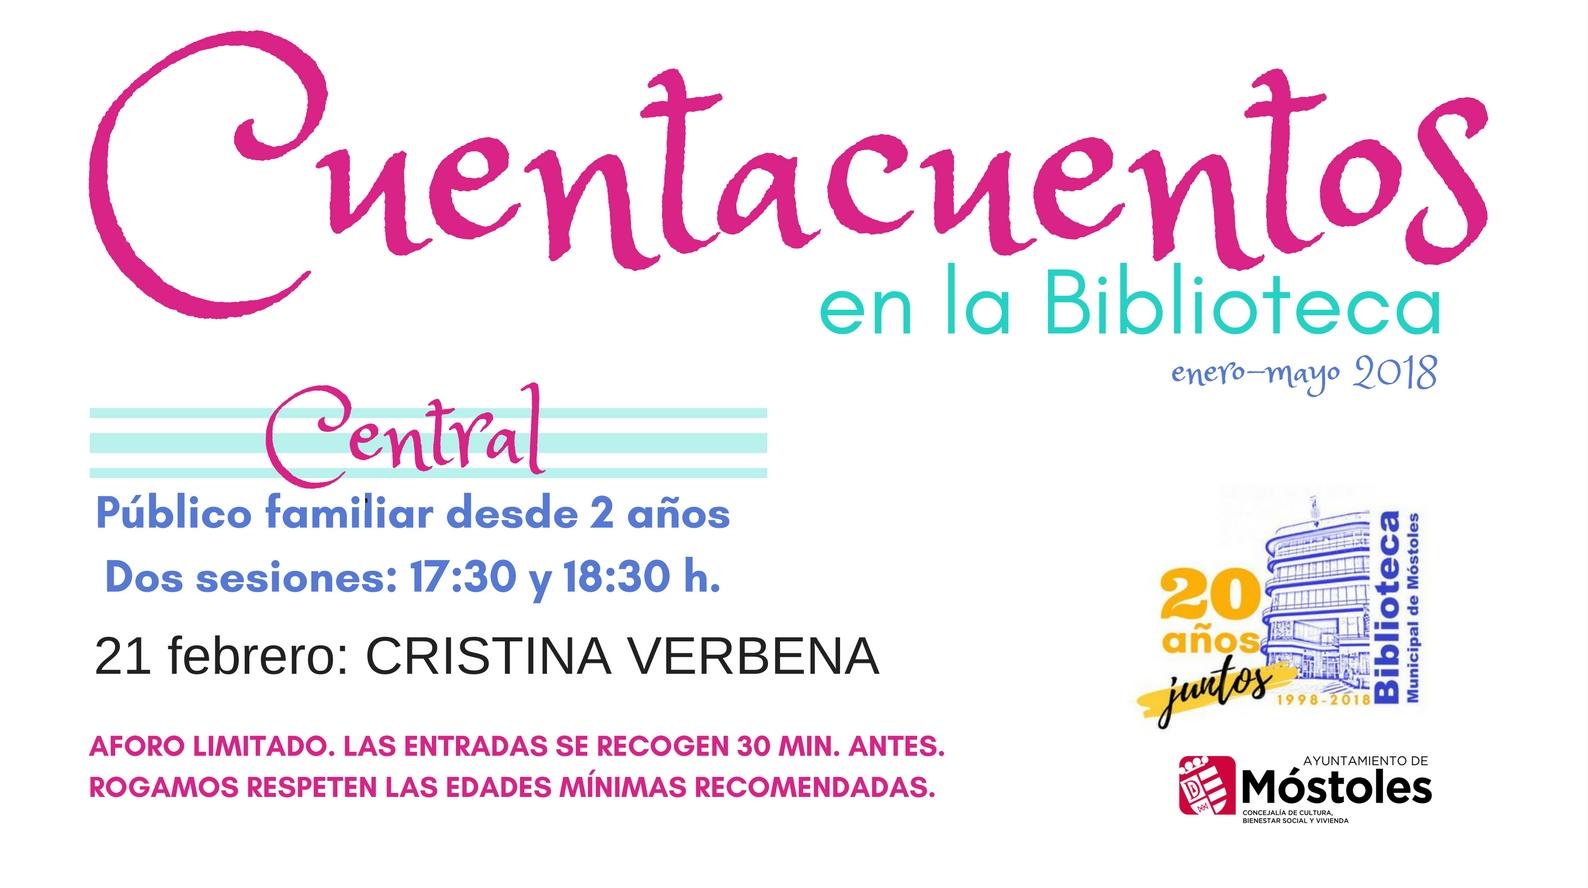 Central 21 febrero Cristina Verbena